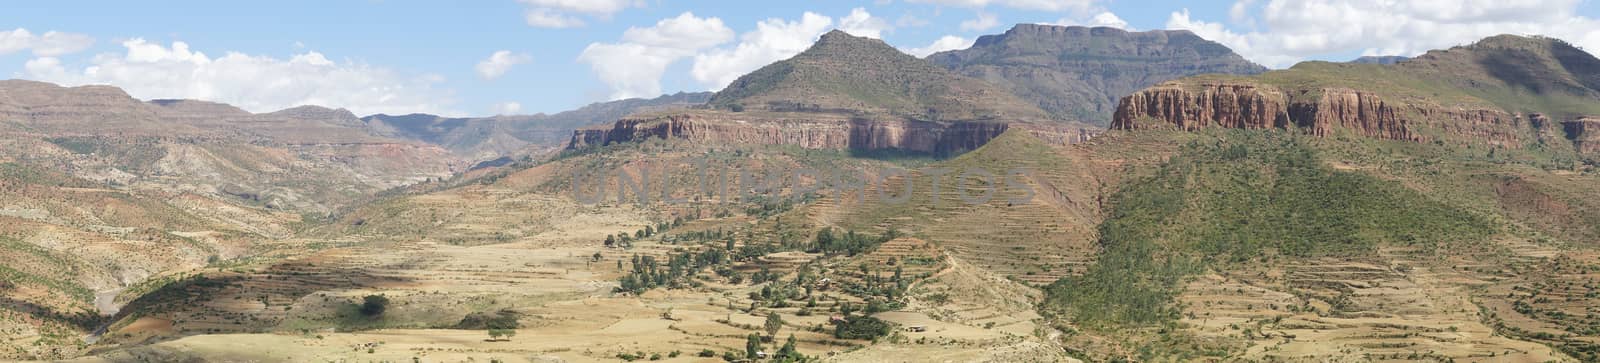 Landscape, Ethiopia, Africa by alfotokunst